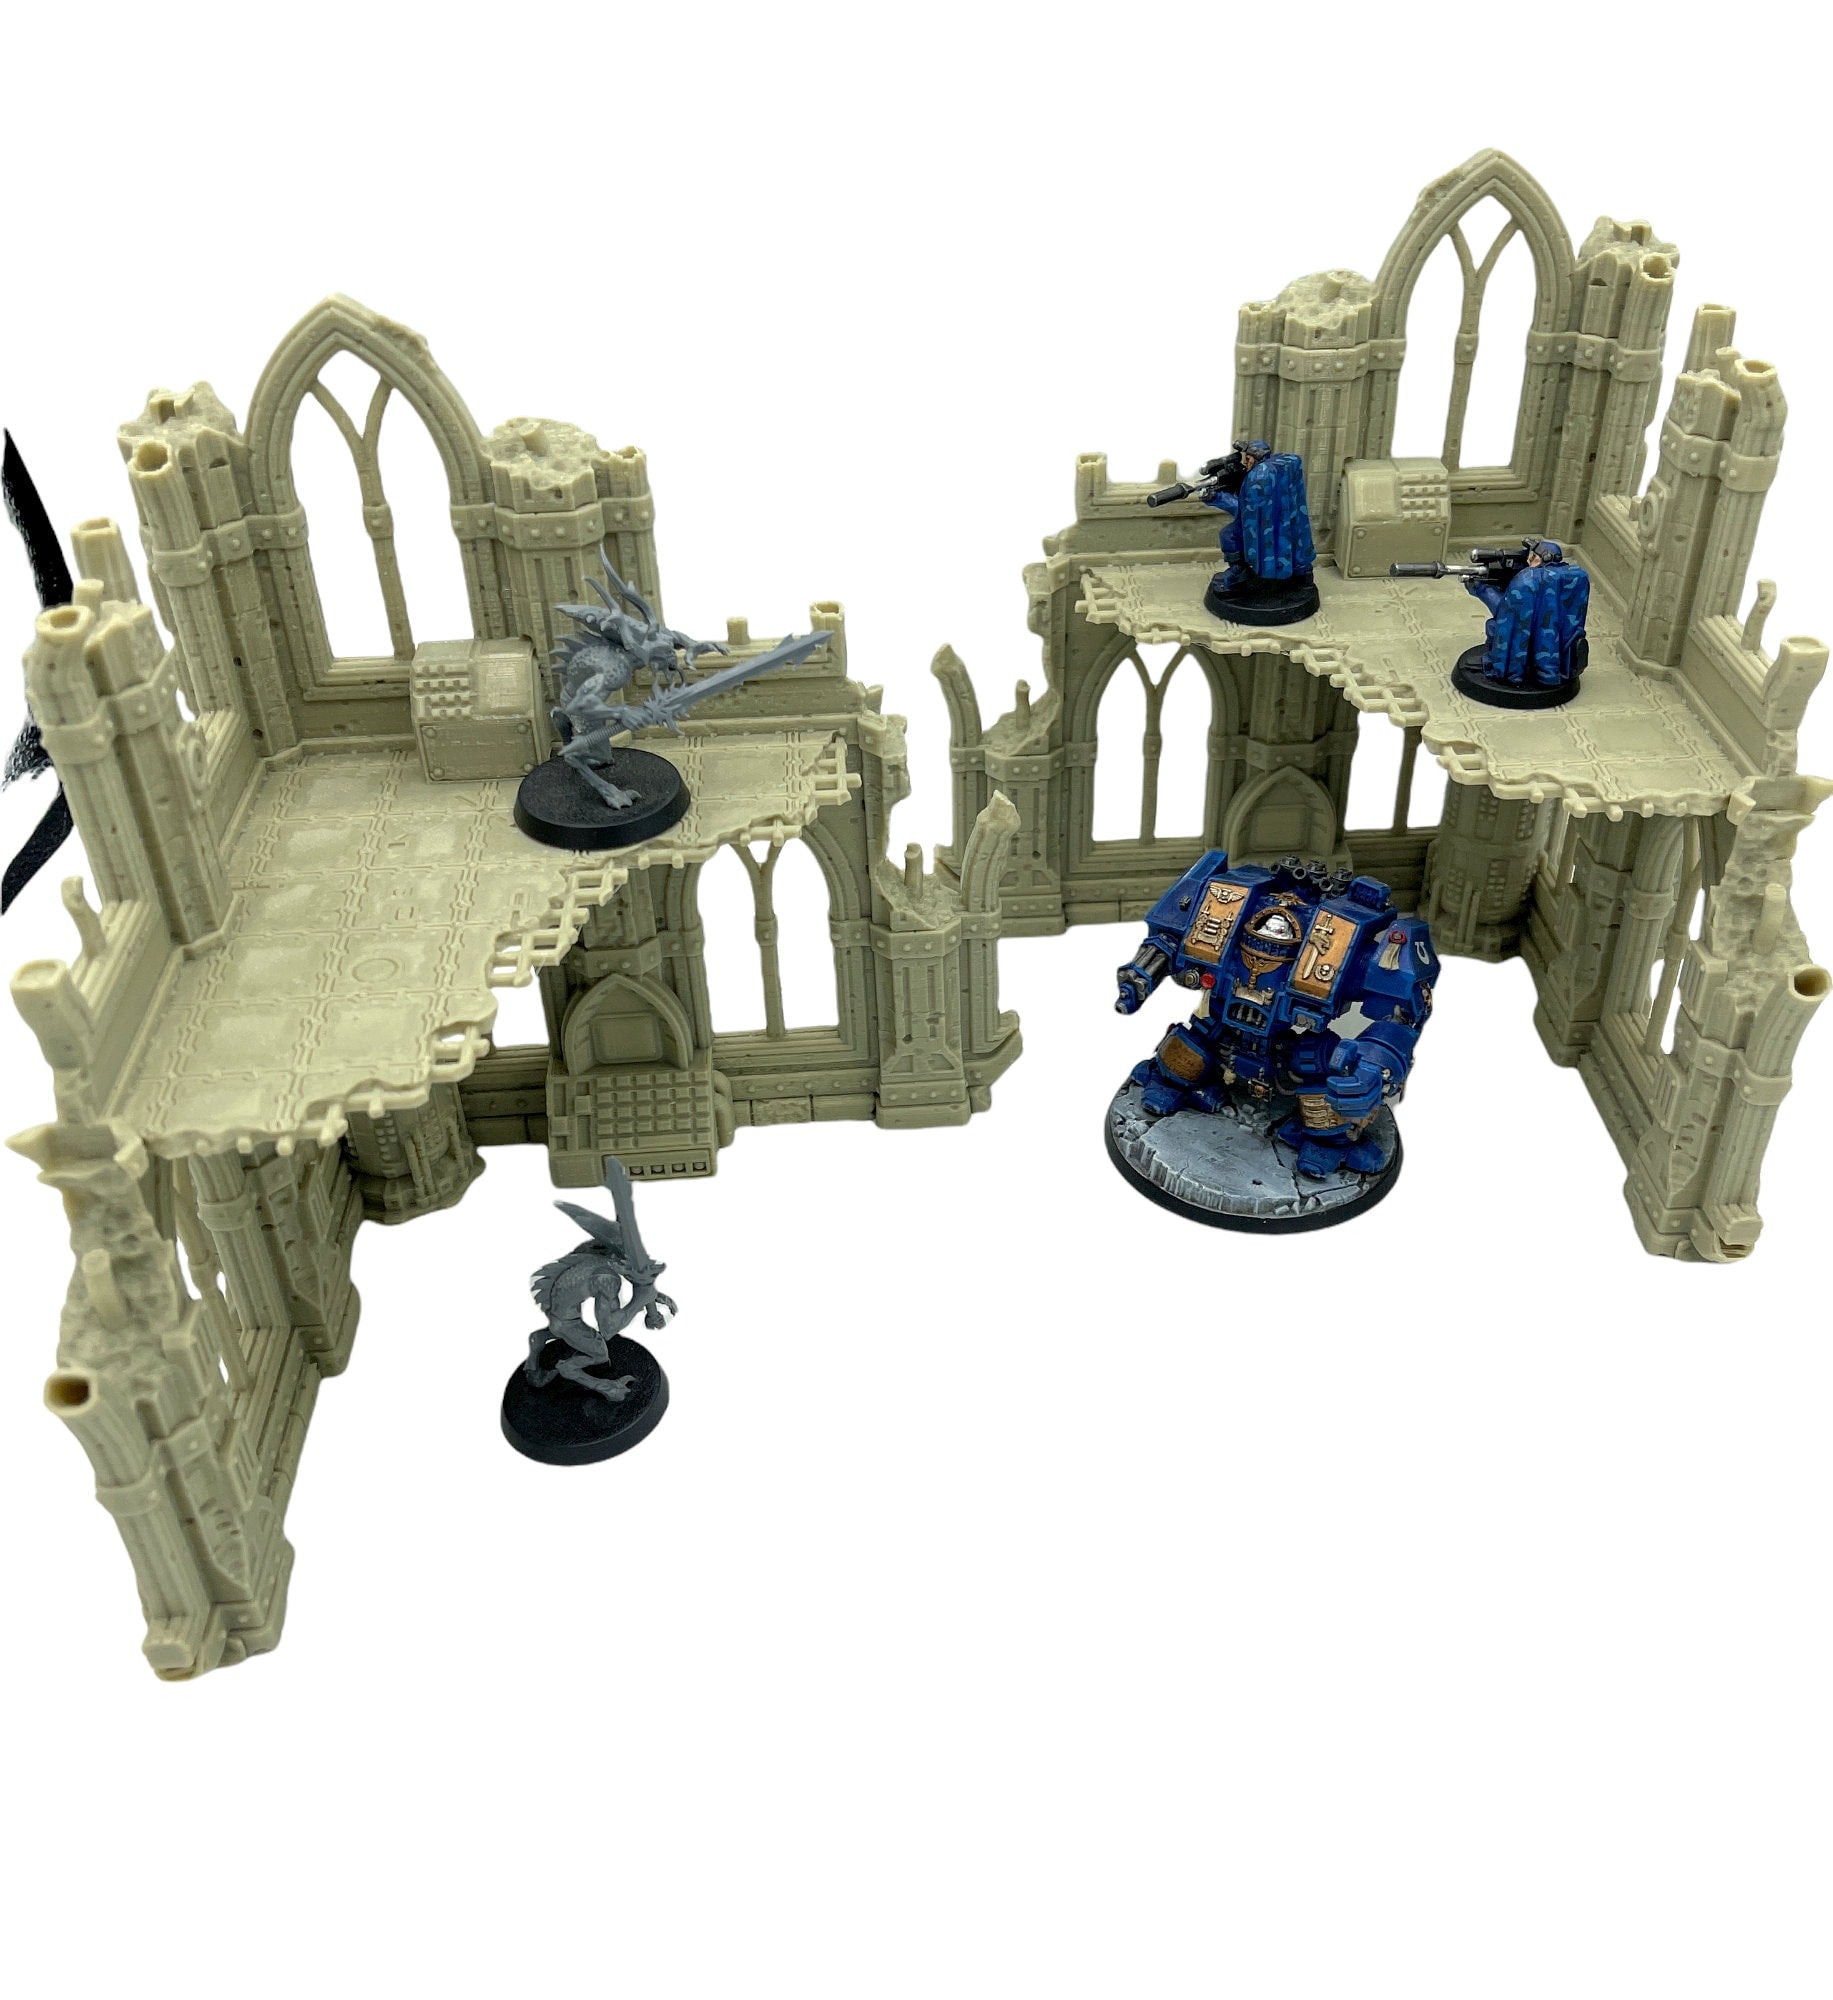 Grim Dark Ruins Set 3 / Terrain 4 Print / RPG and Wargame 3d Printed Tabletop Terrain / Licensed Printer